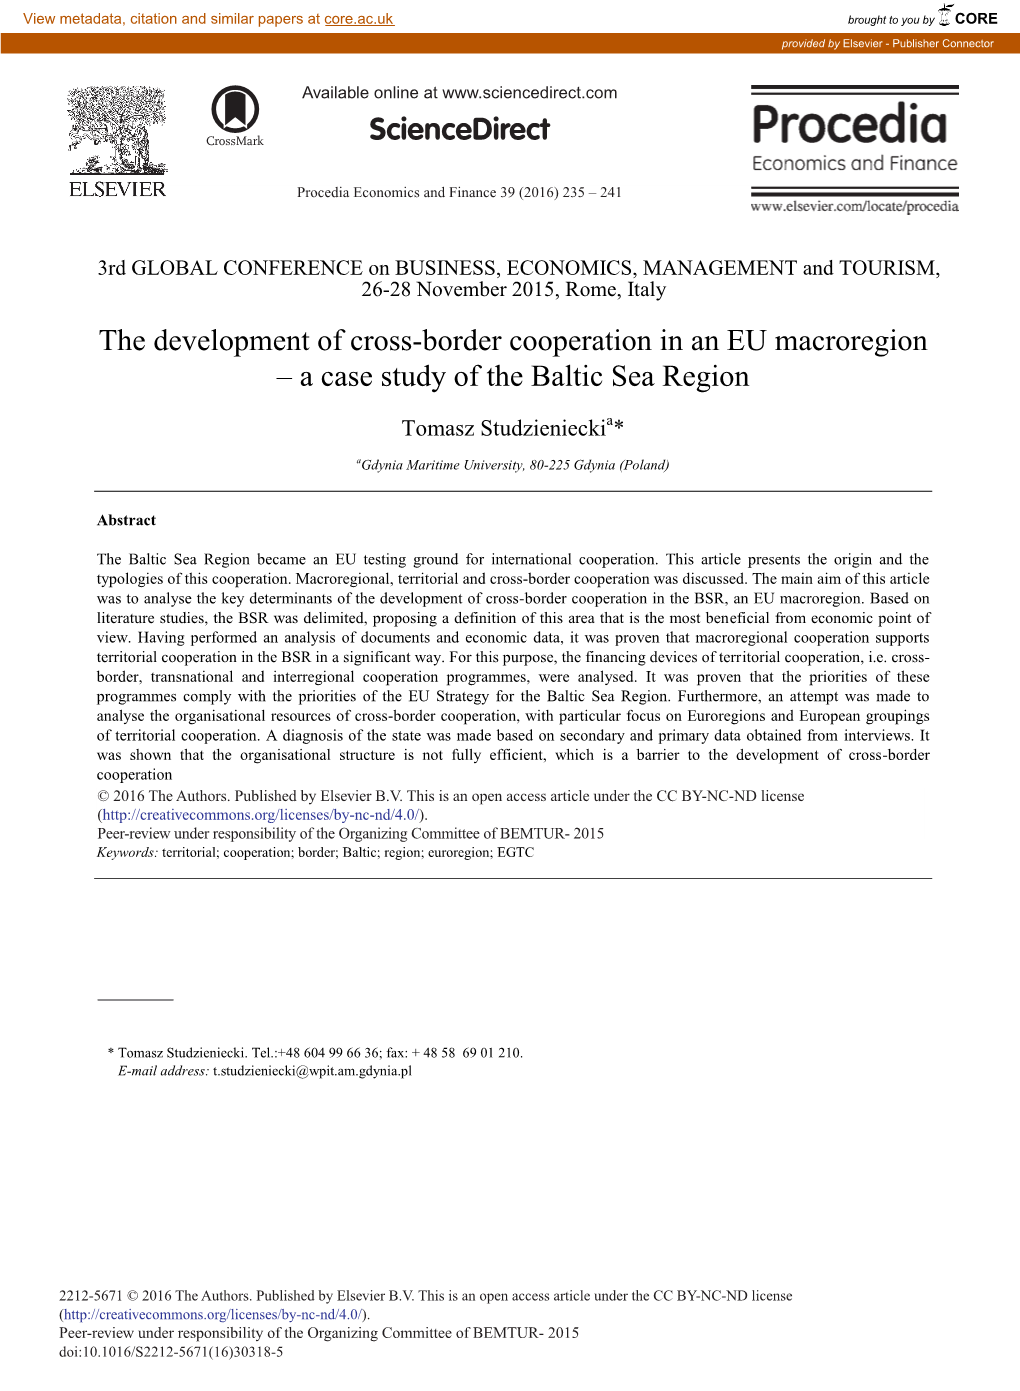 The Development of Cross-Border Cooperation in an EU Macroregion – a Case Study of the Baltic Sea Region